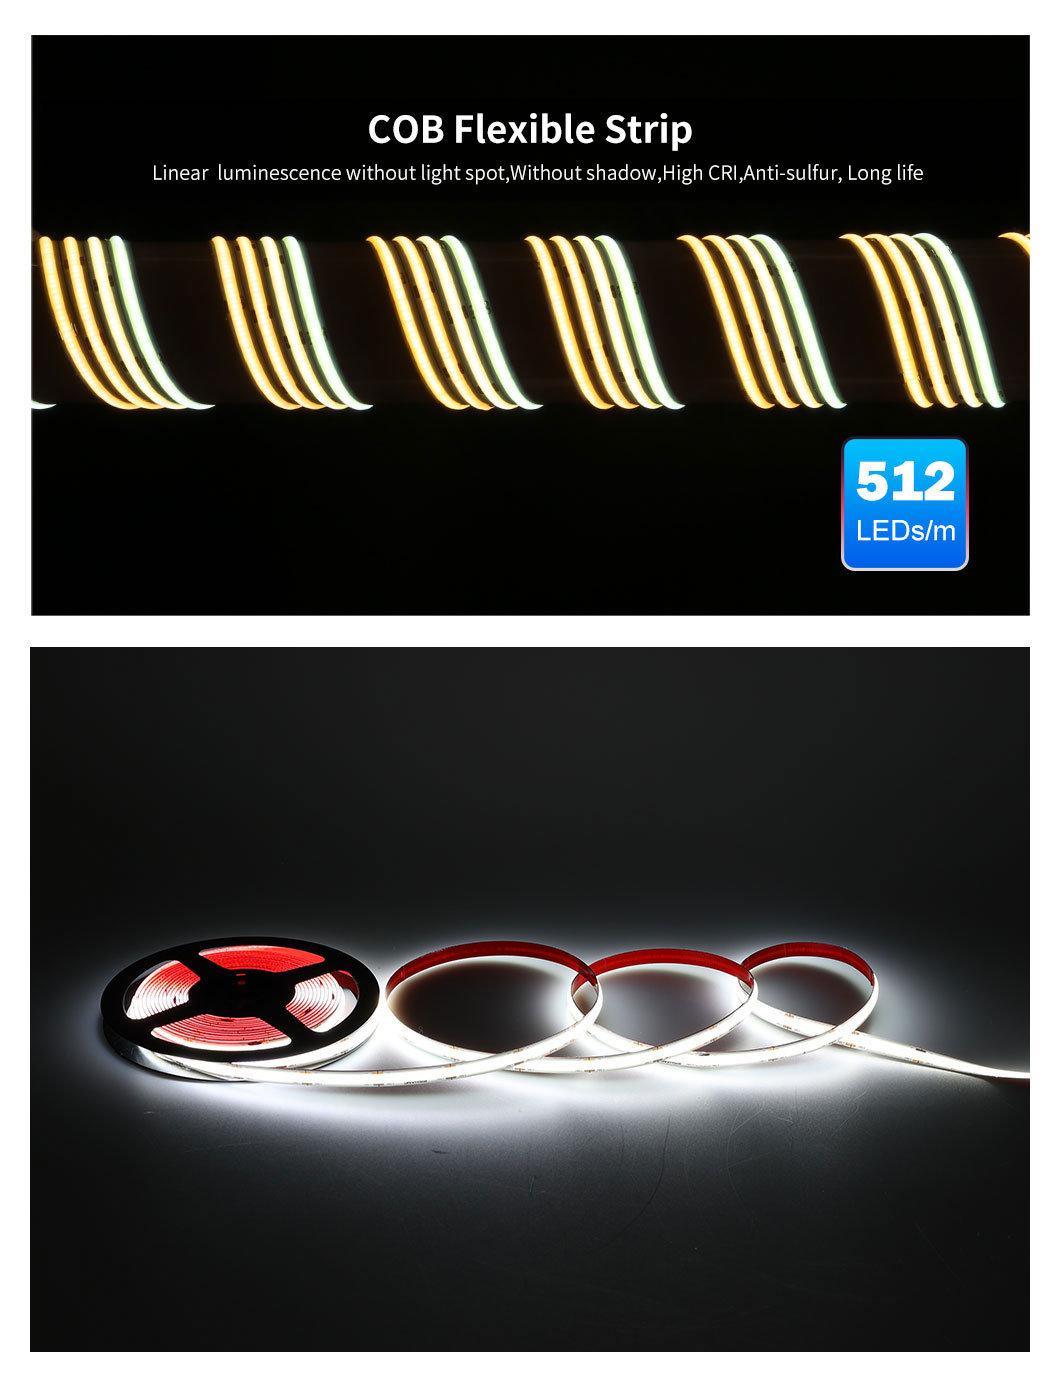 High Density DC24V 960-1080lm 3 Years Warranty COB LED Strip Linear Lighting COB LED Strip for Decorative Lighting